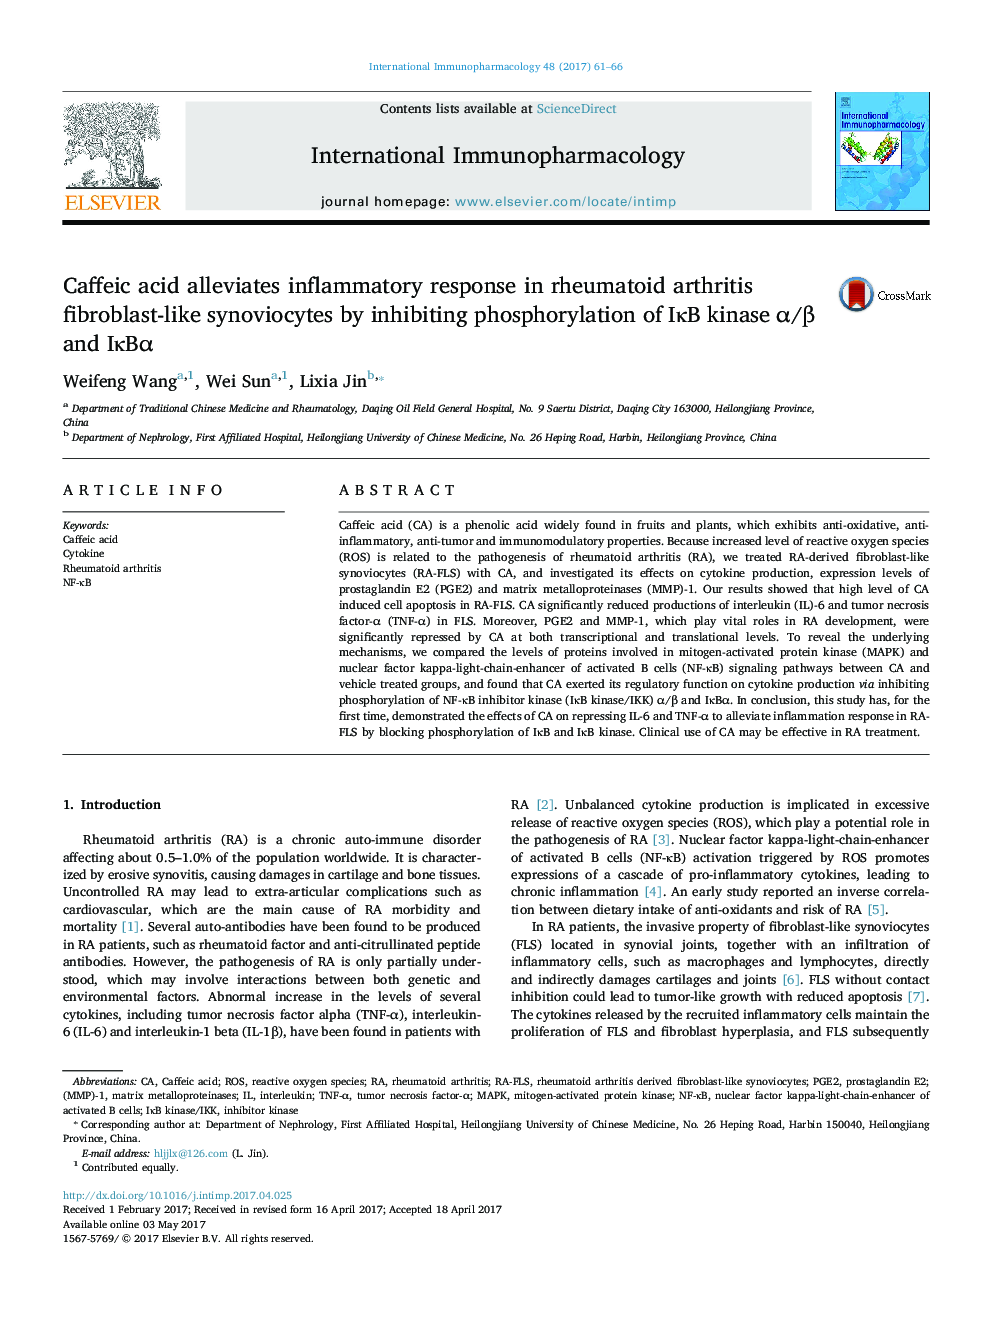 Caffeic acid alleviates inflammatory response in rheumatoid arthritis fibroblast-like synoviocytes by inhibiting phosphorylation of IÎºB kinase Î±/Î² and IÎºBÎ±